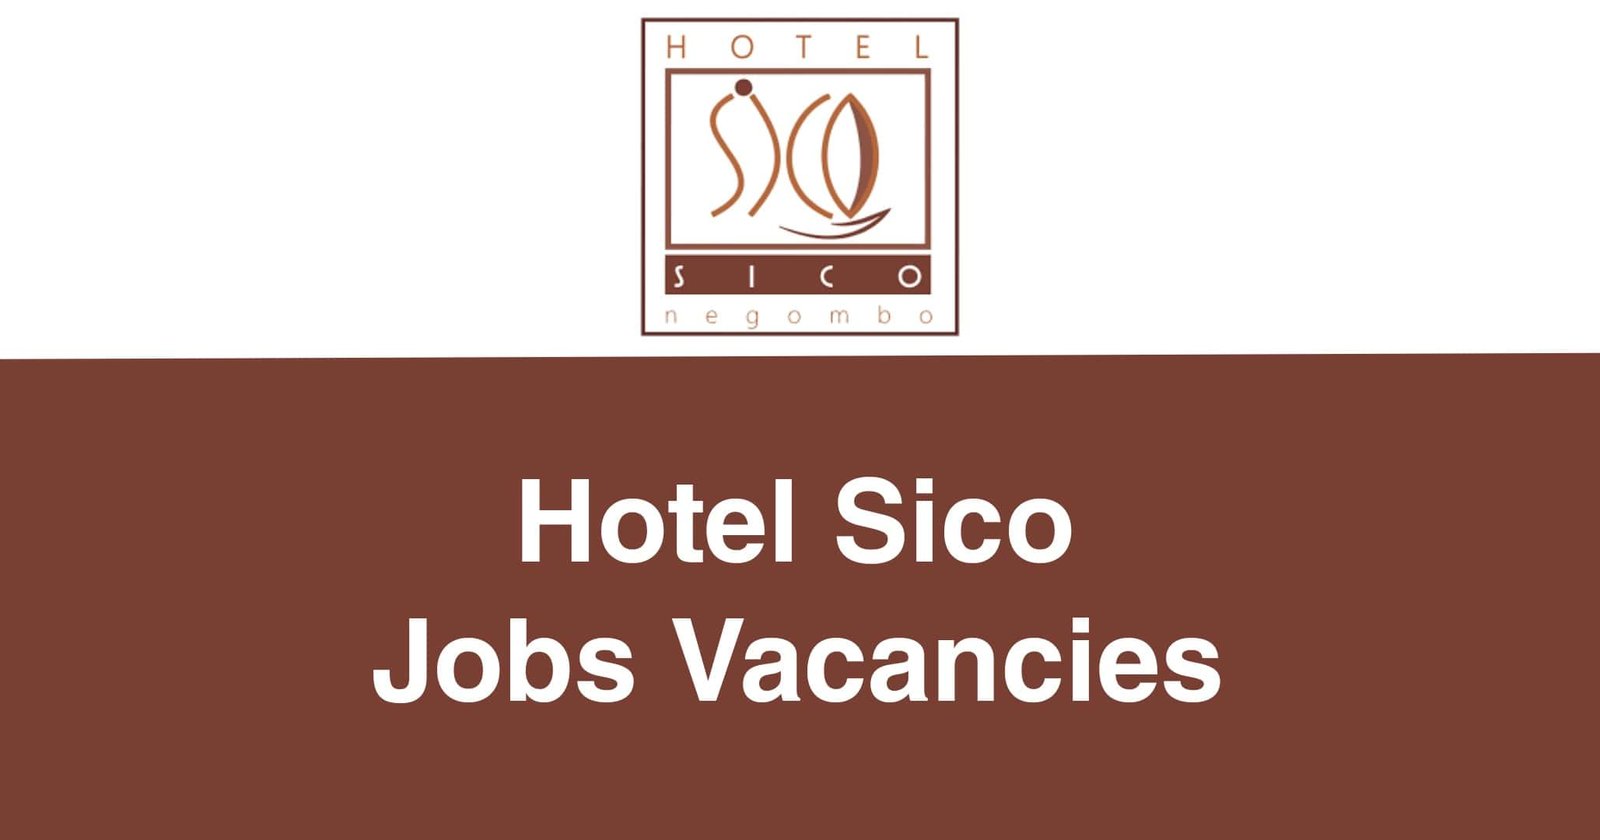 Hotel Sico Jobs Vacancies